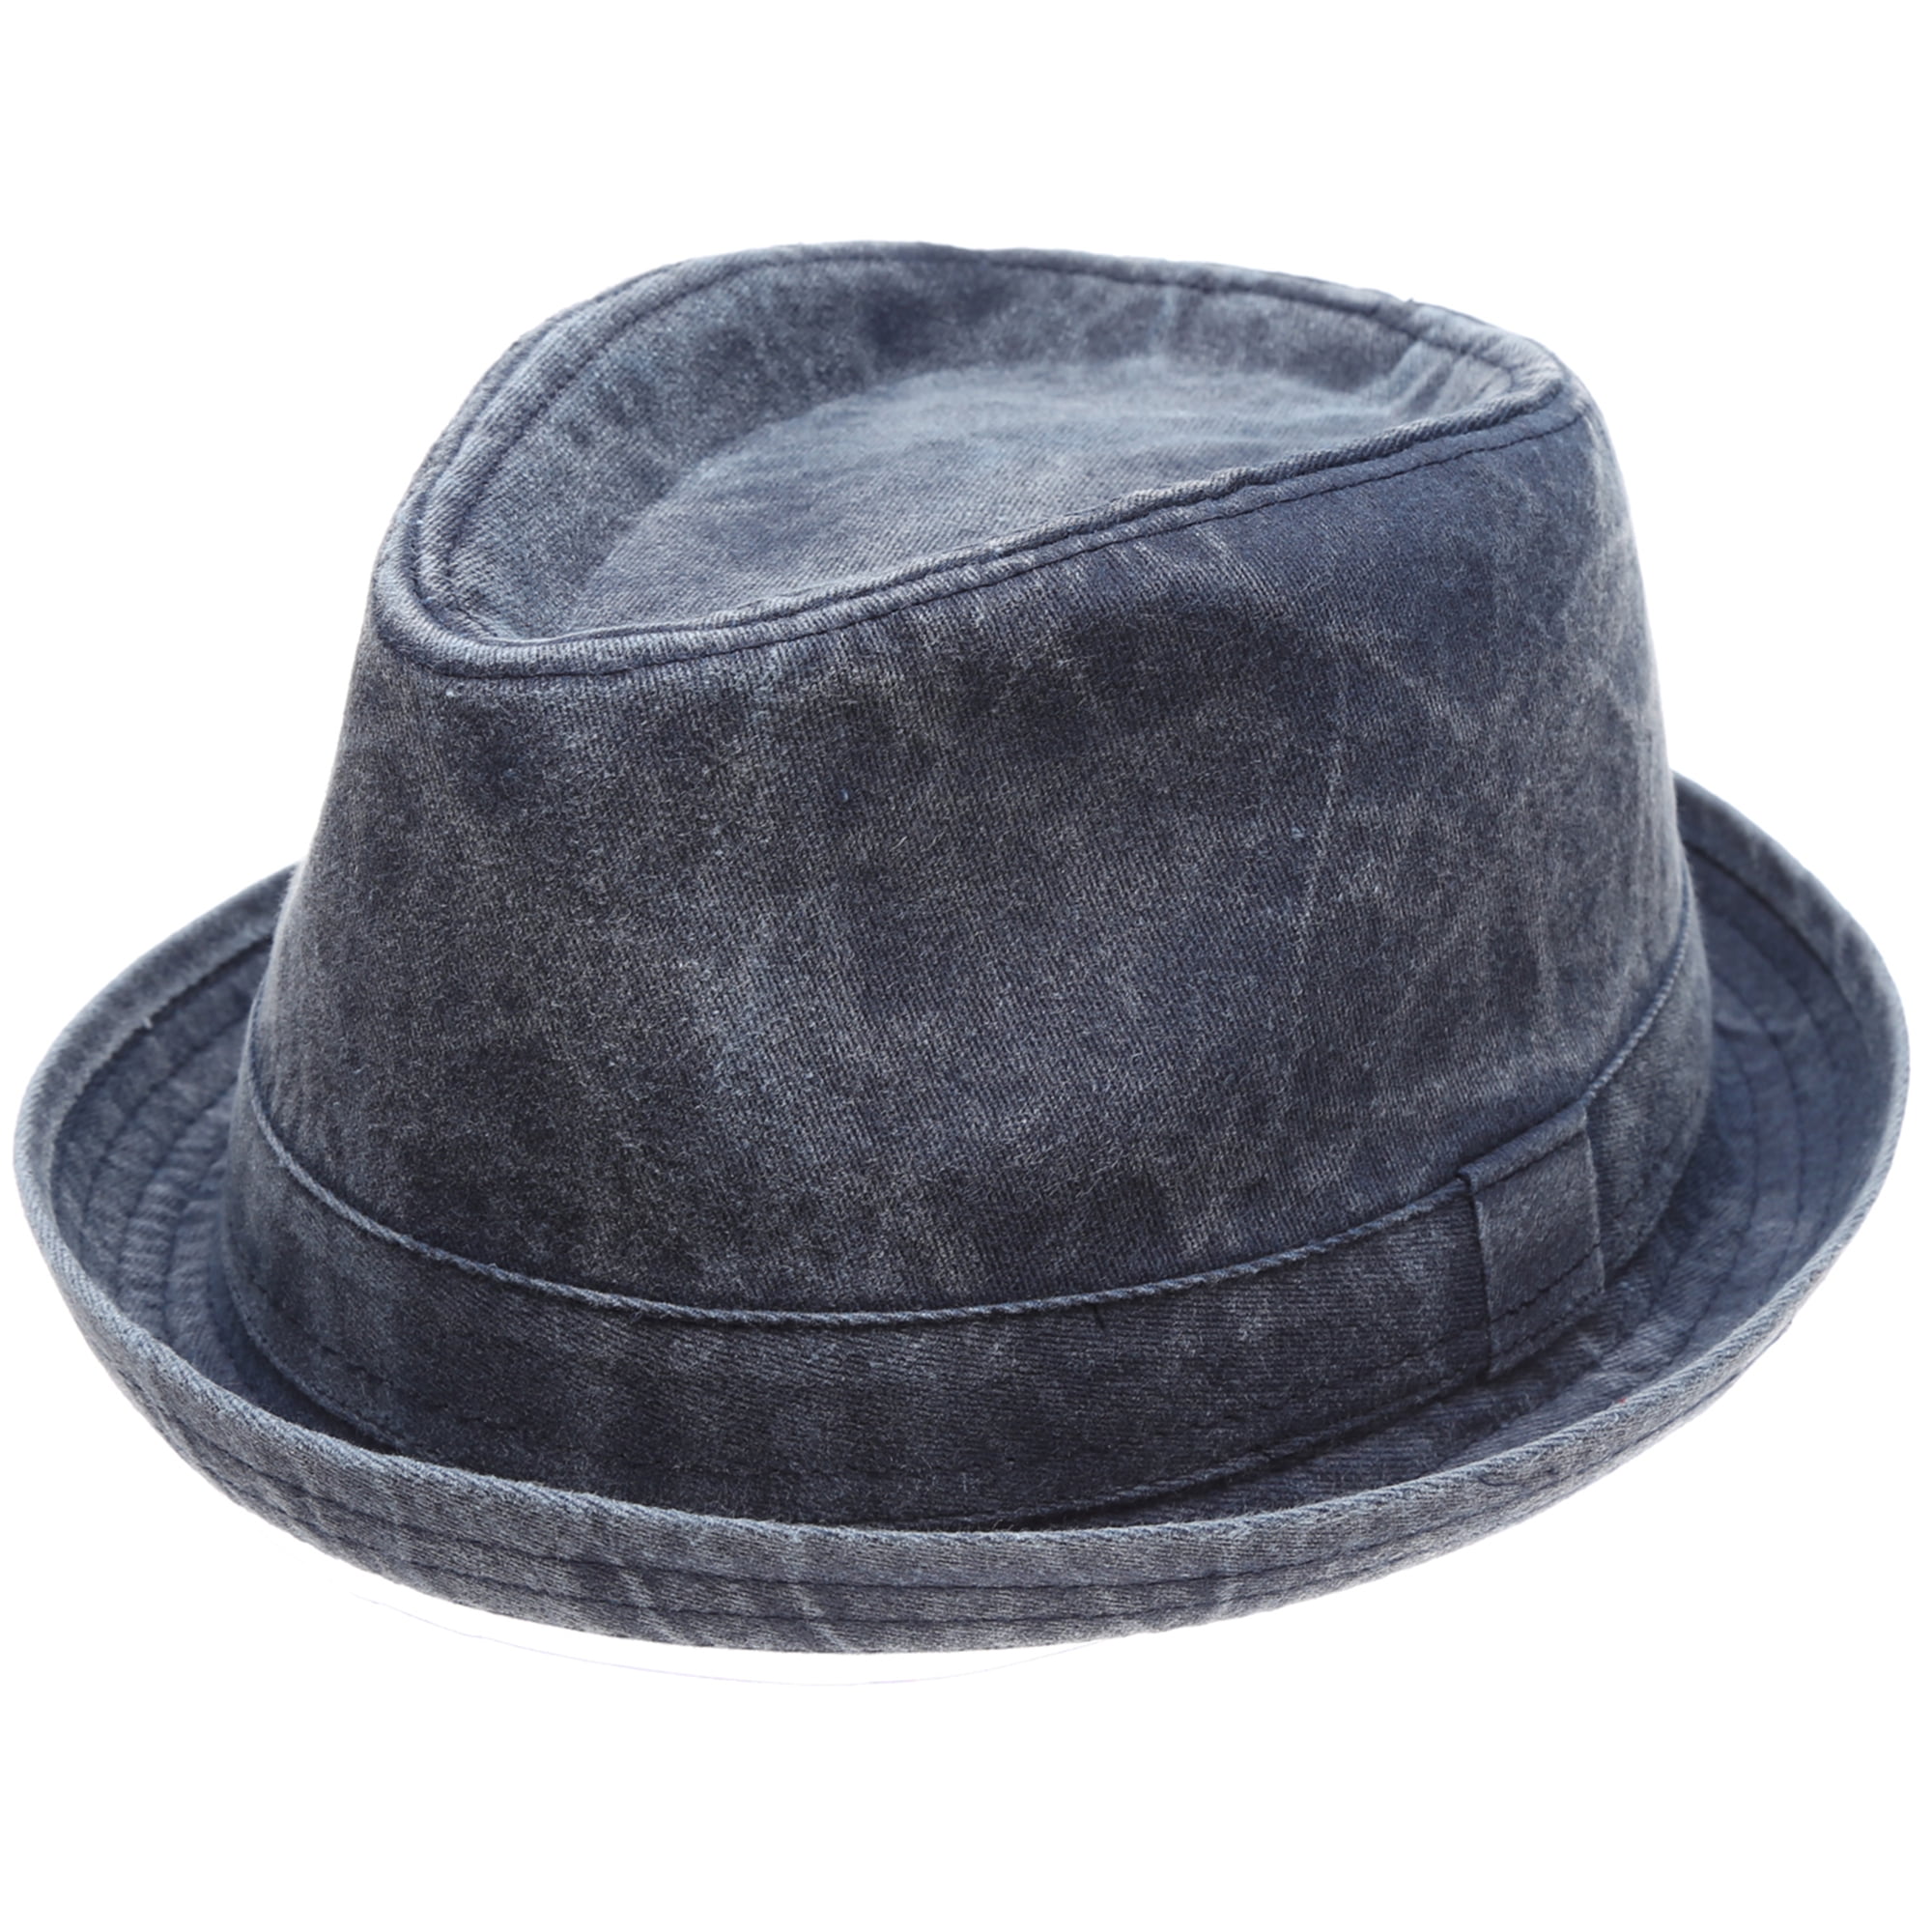 Mirmaru Mens Denim Washed Cotton Casual Vintage Style Fedora Sun Hat